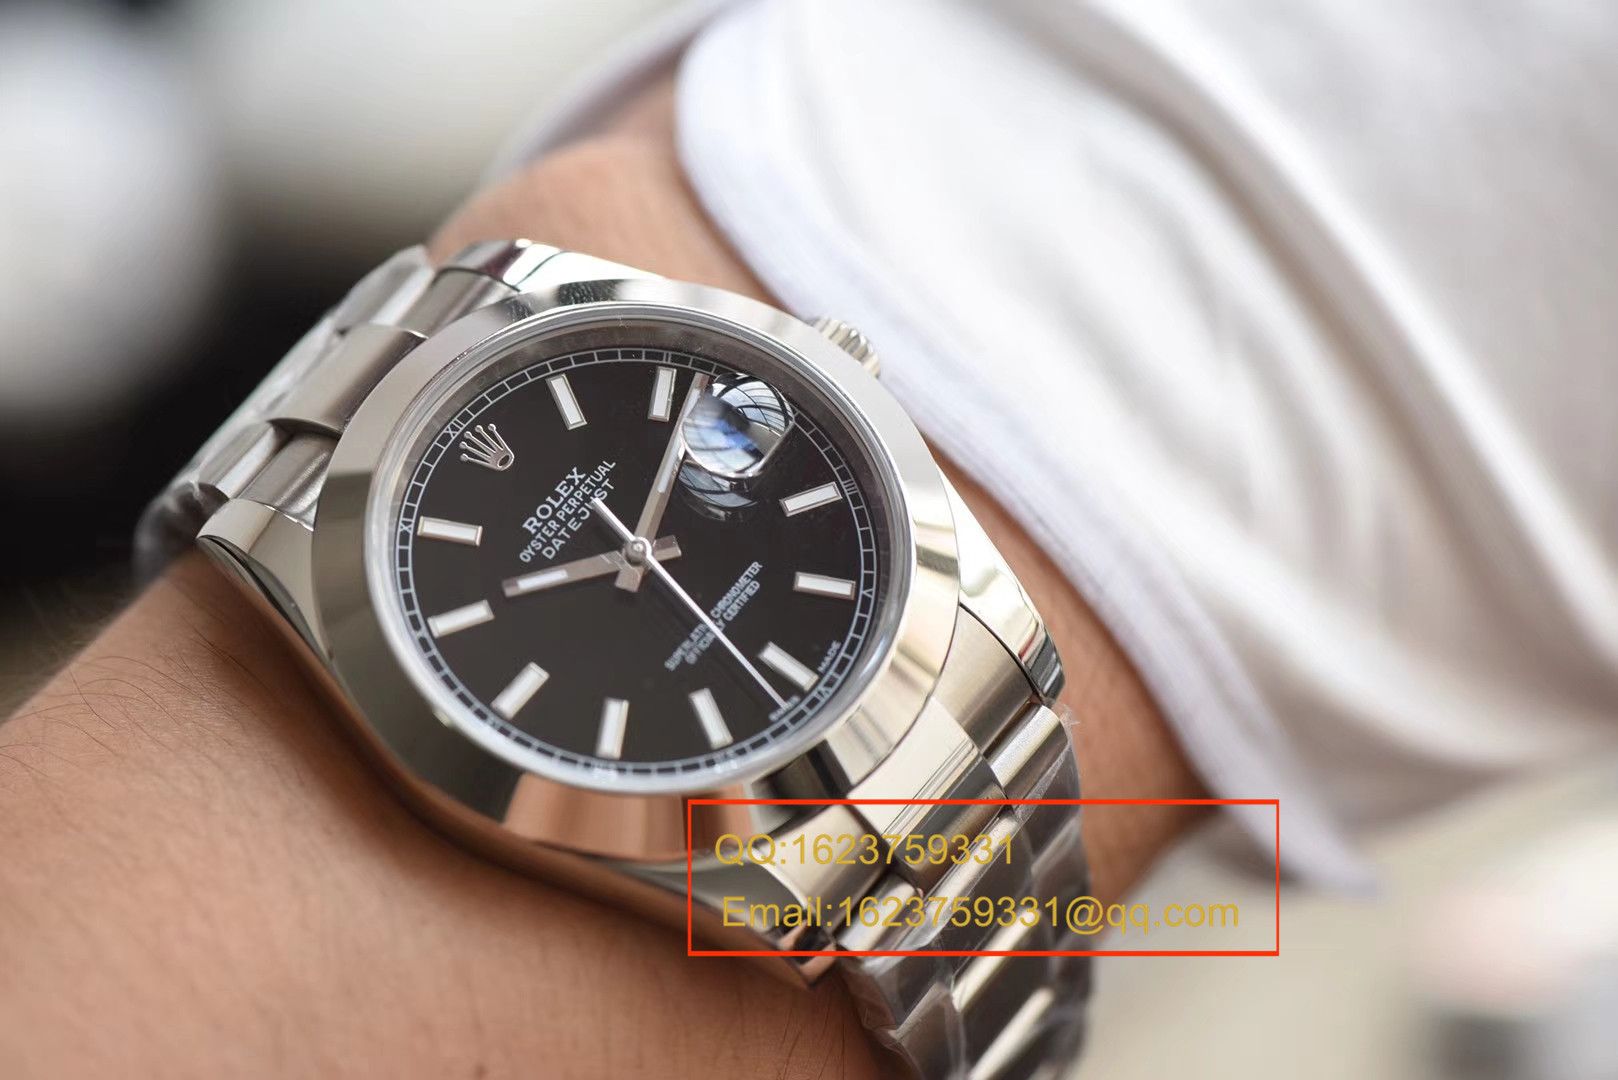 【N厂超A1:1精仿手表】劳力士日志型系列116334-黑盘腕表 